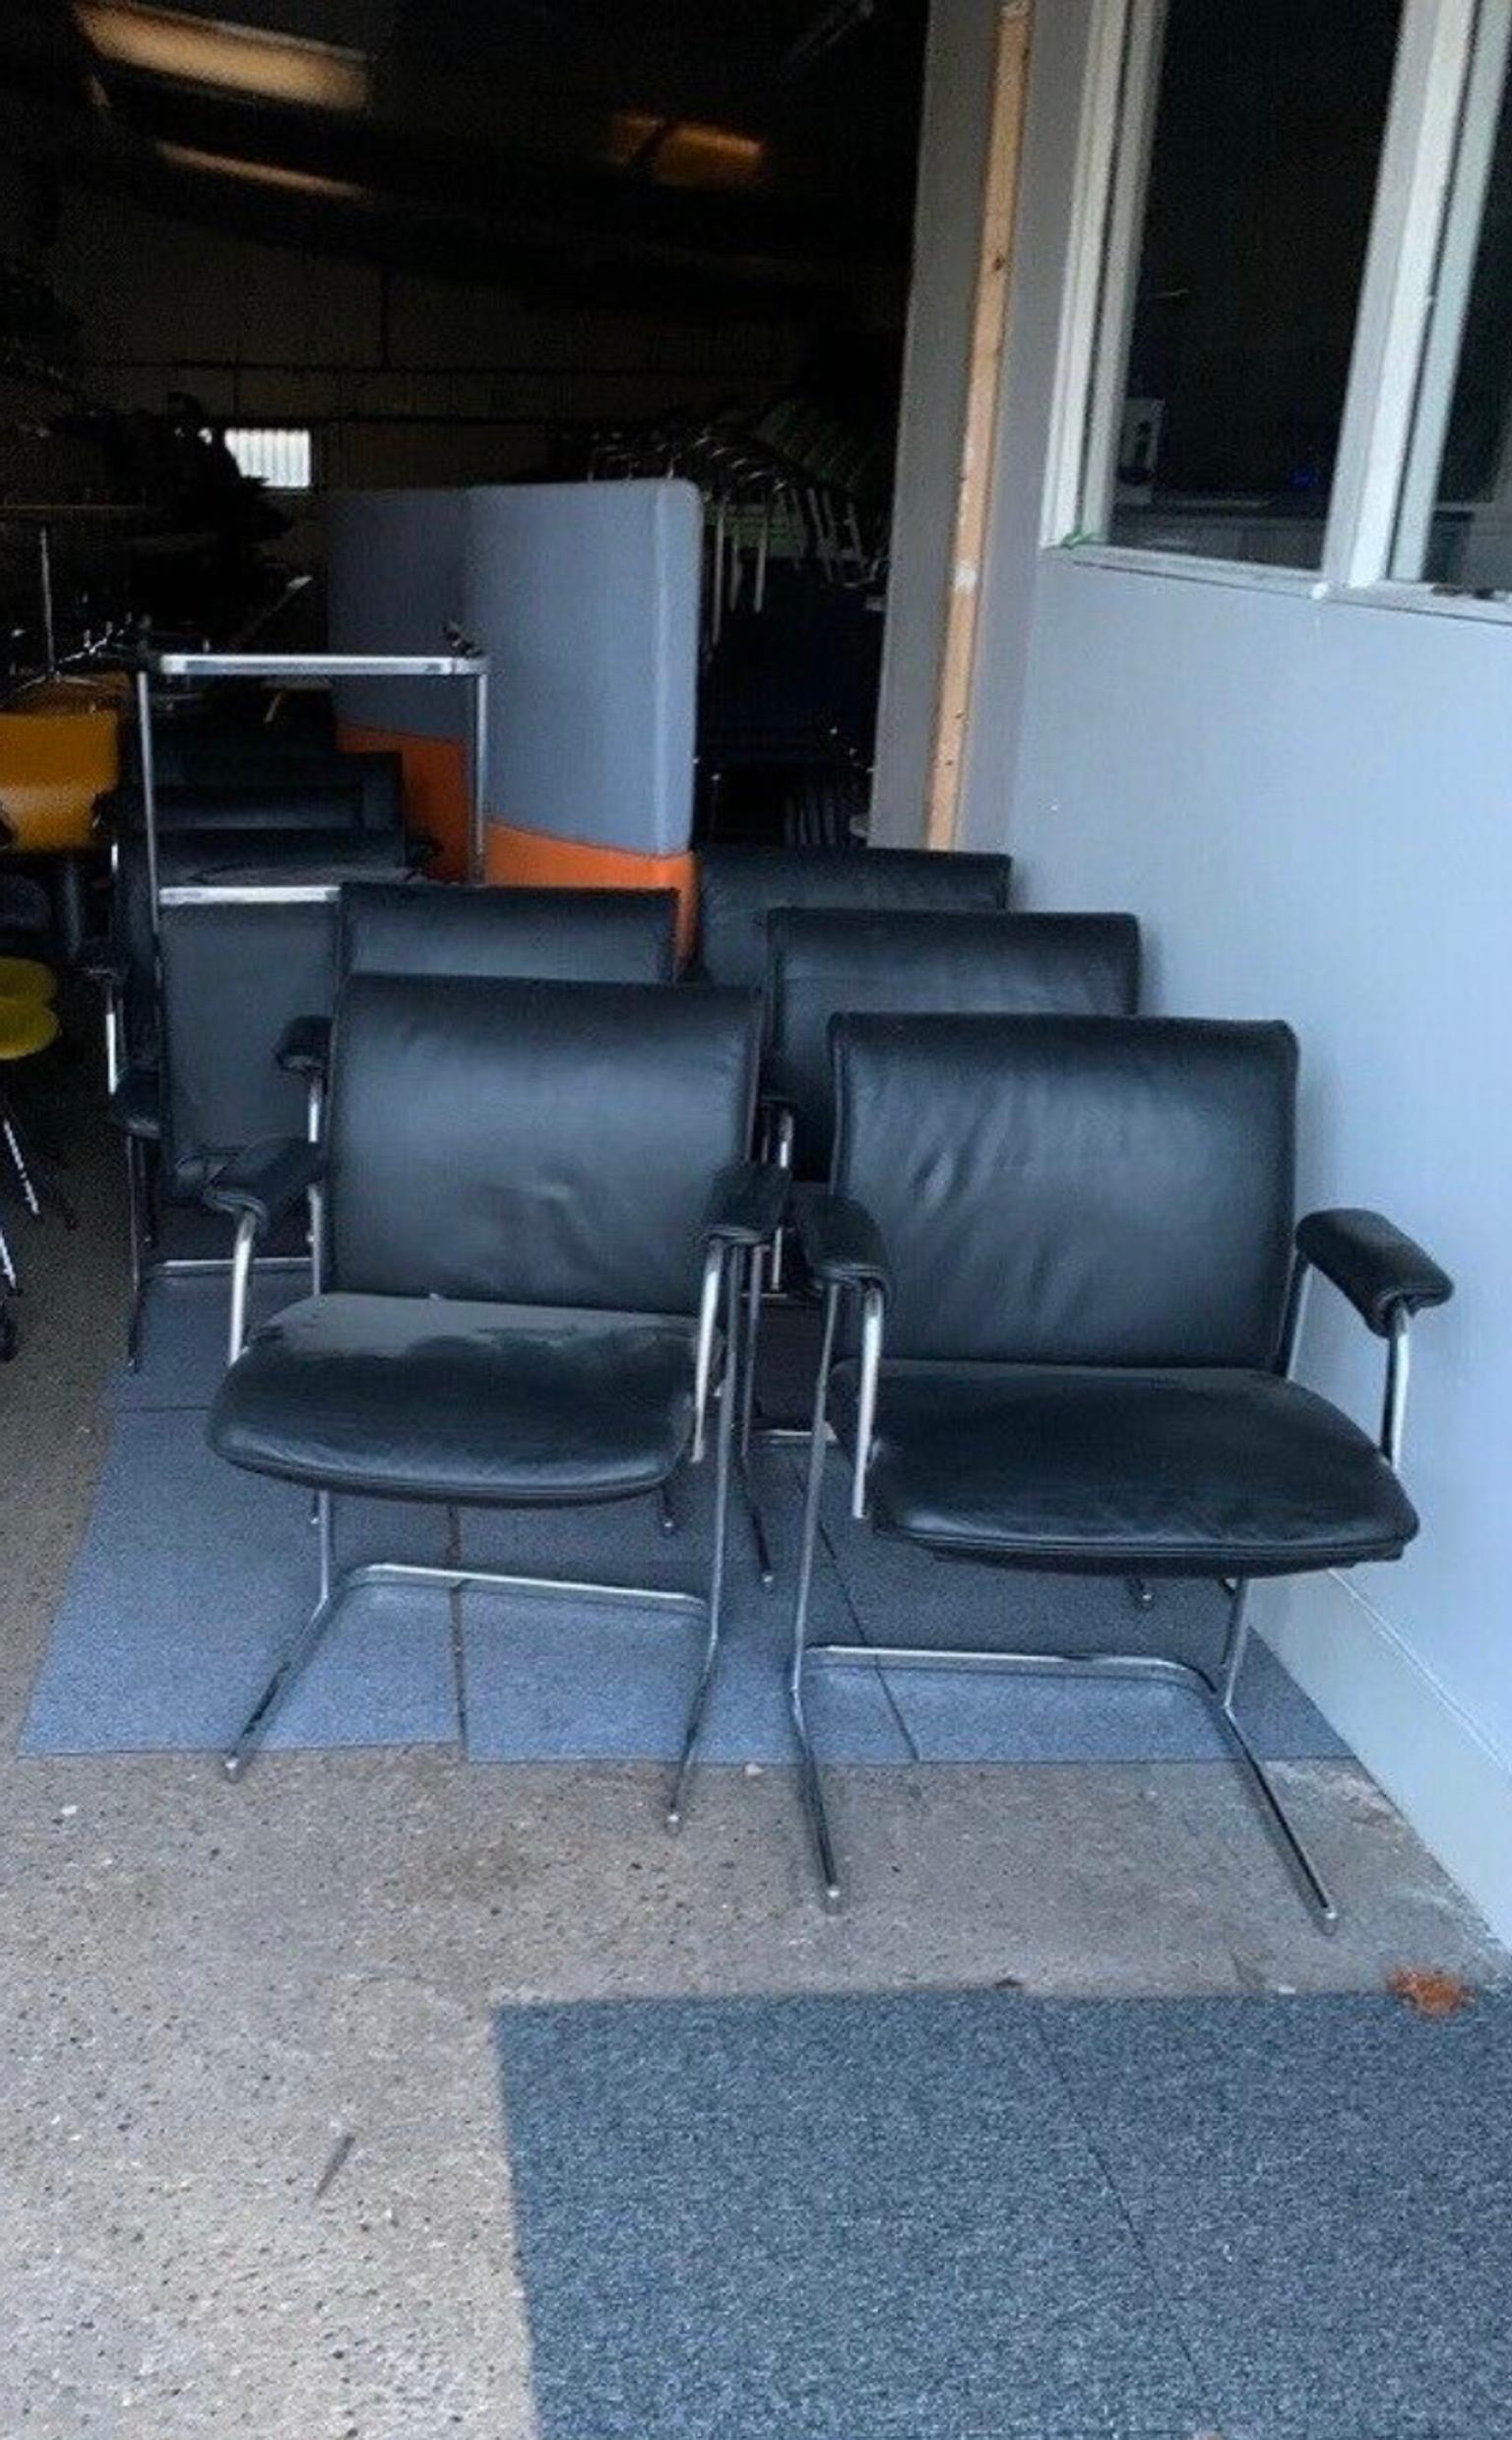 Boss Delphi Leather Chairs Office Furniture In Uttlesford Fur 75 00 Zum Verkauf Shpock At